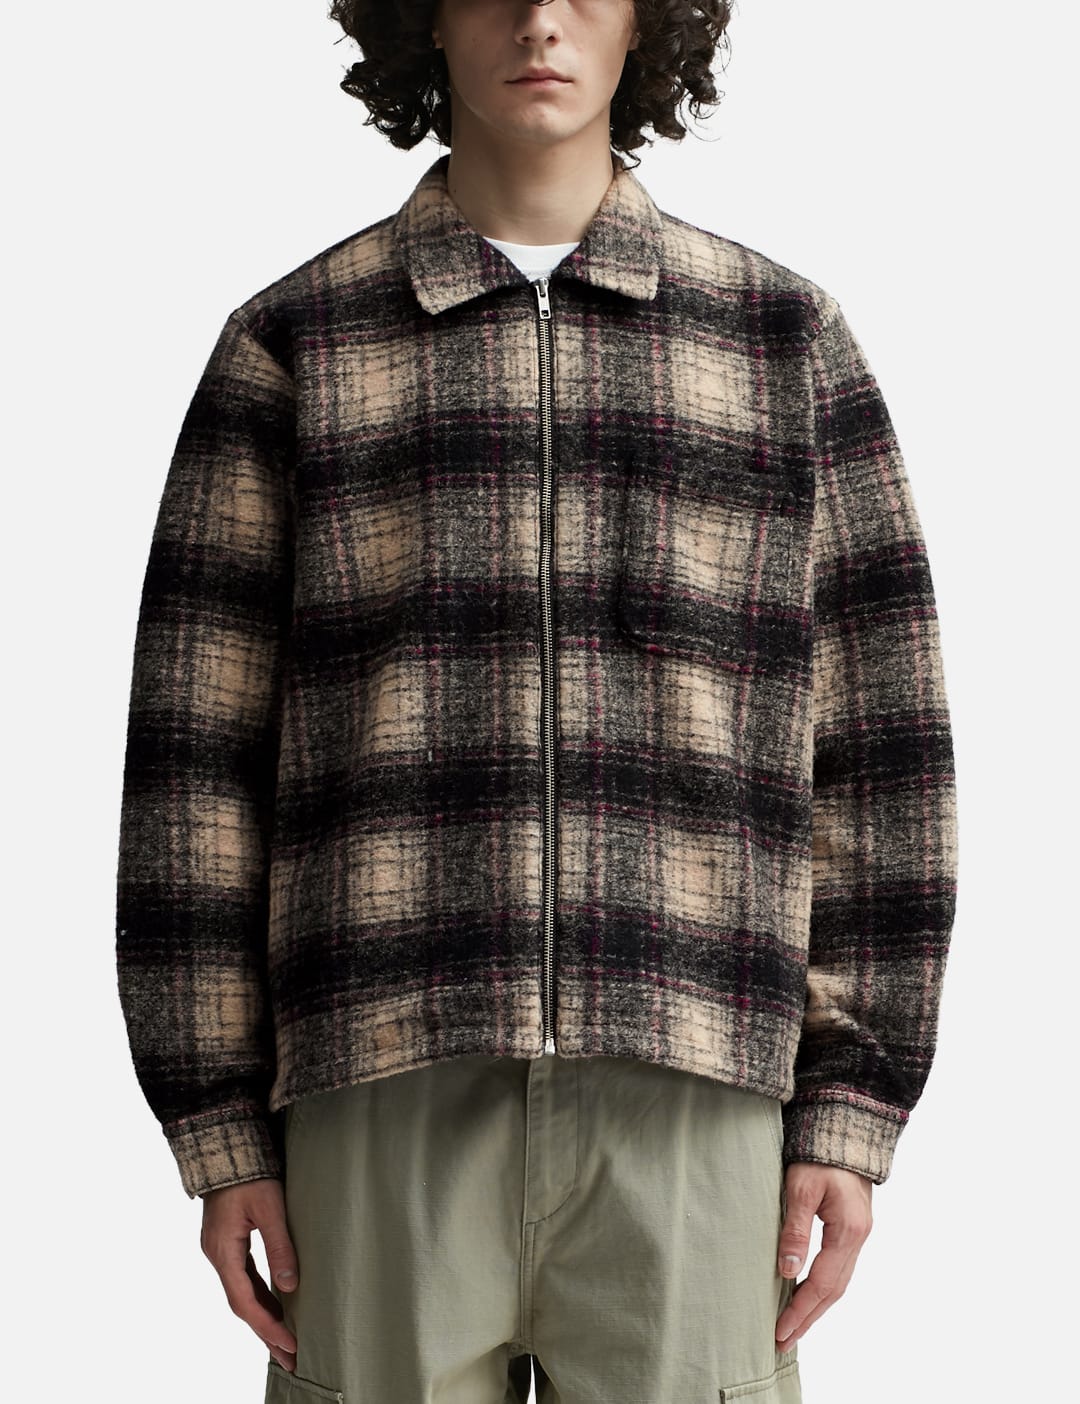 Stüssy - Wool Plaid Zip Shirt | HBX - Globally Curated